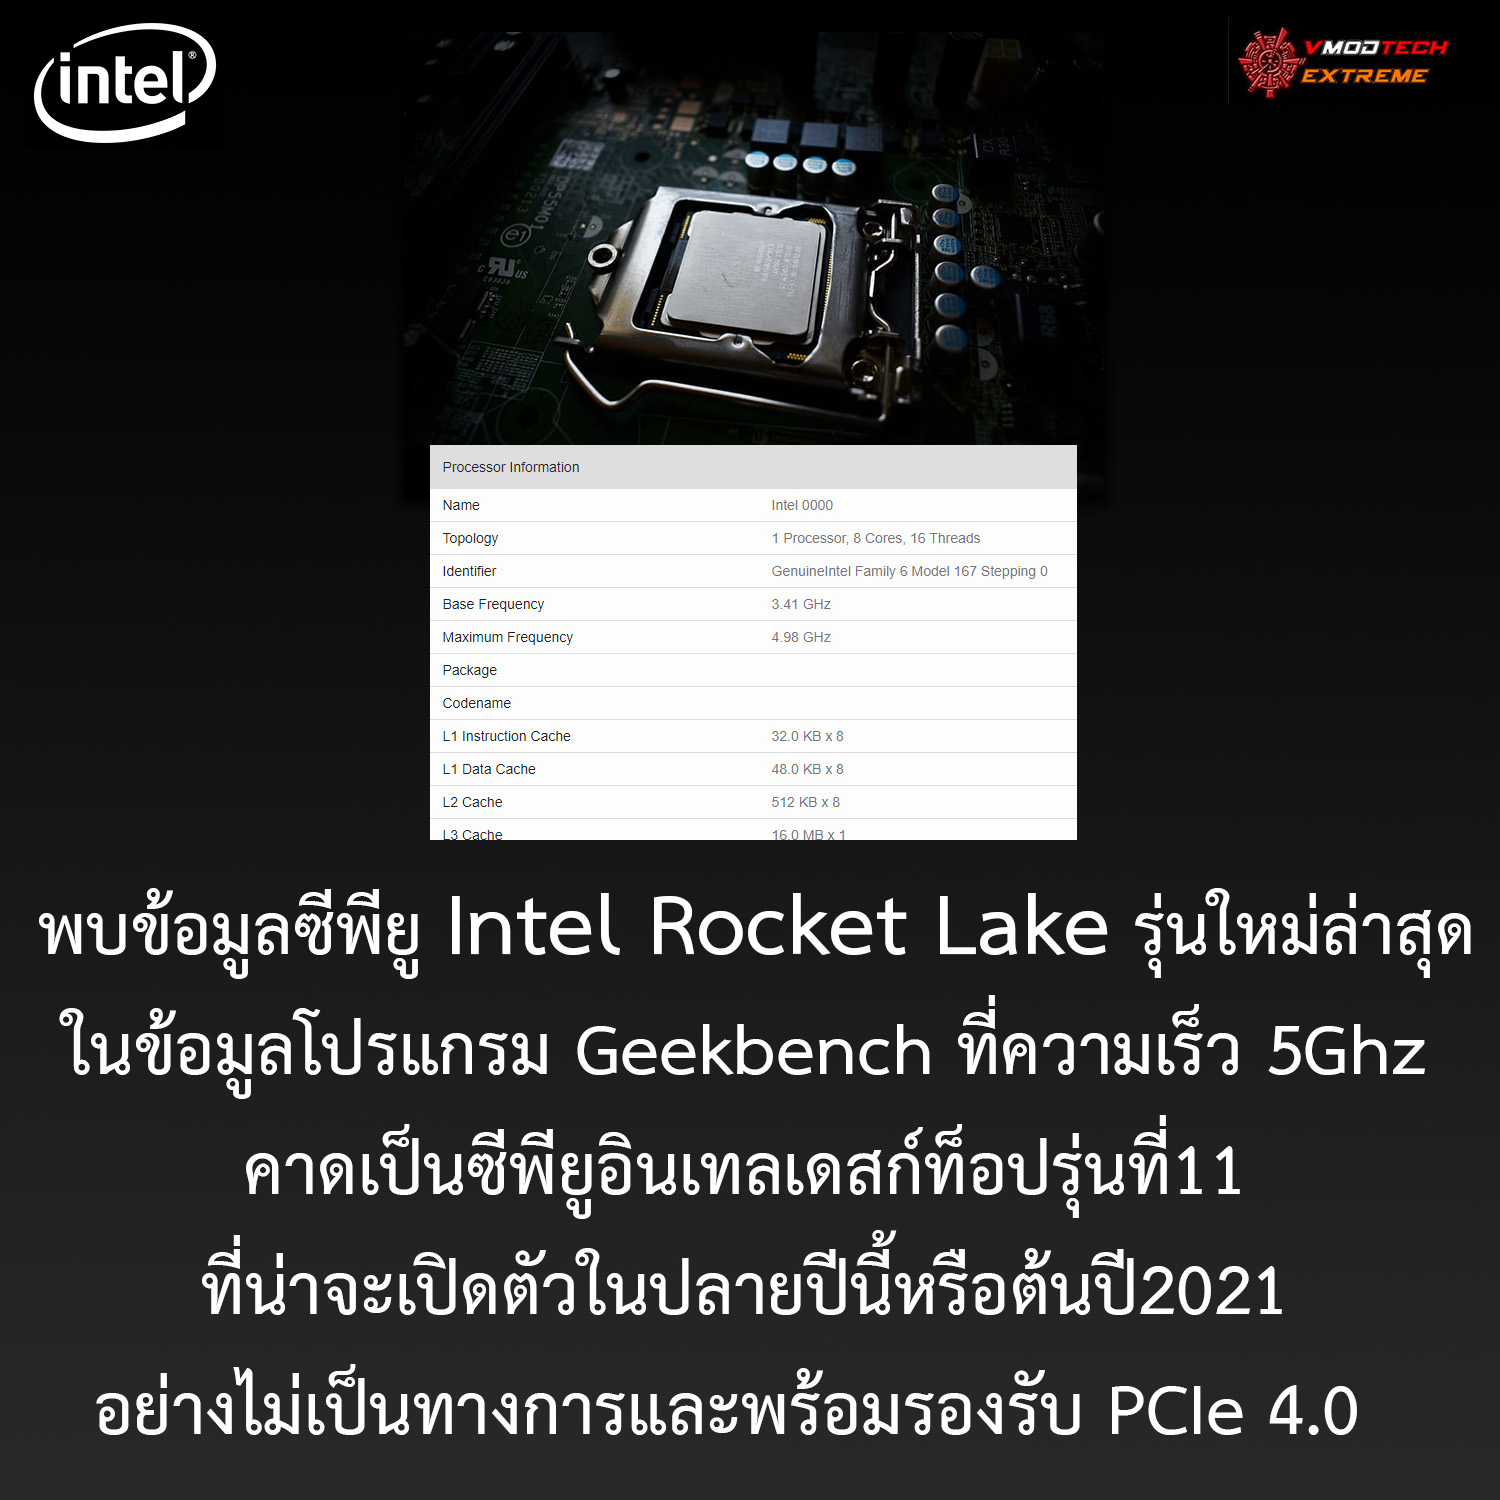 intel rocket lake 5ghz 2020 2021 พบข้อมูลซีพียู Intel Rocket Lake รุ่นใหม่ล่าสุดที่ความเร็ว 5Ghz คาดเป็นซีพียูเดสก์ท็อปรุ่นที่11 ที่น่าจะเปิดตัวในปลายปีนี้หรือต้นปี2021 อย่างไม่เป็นทางการ  